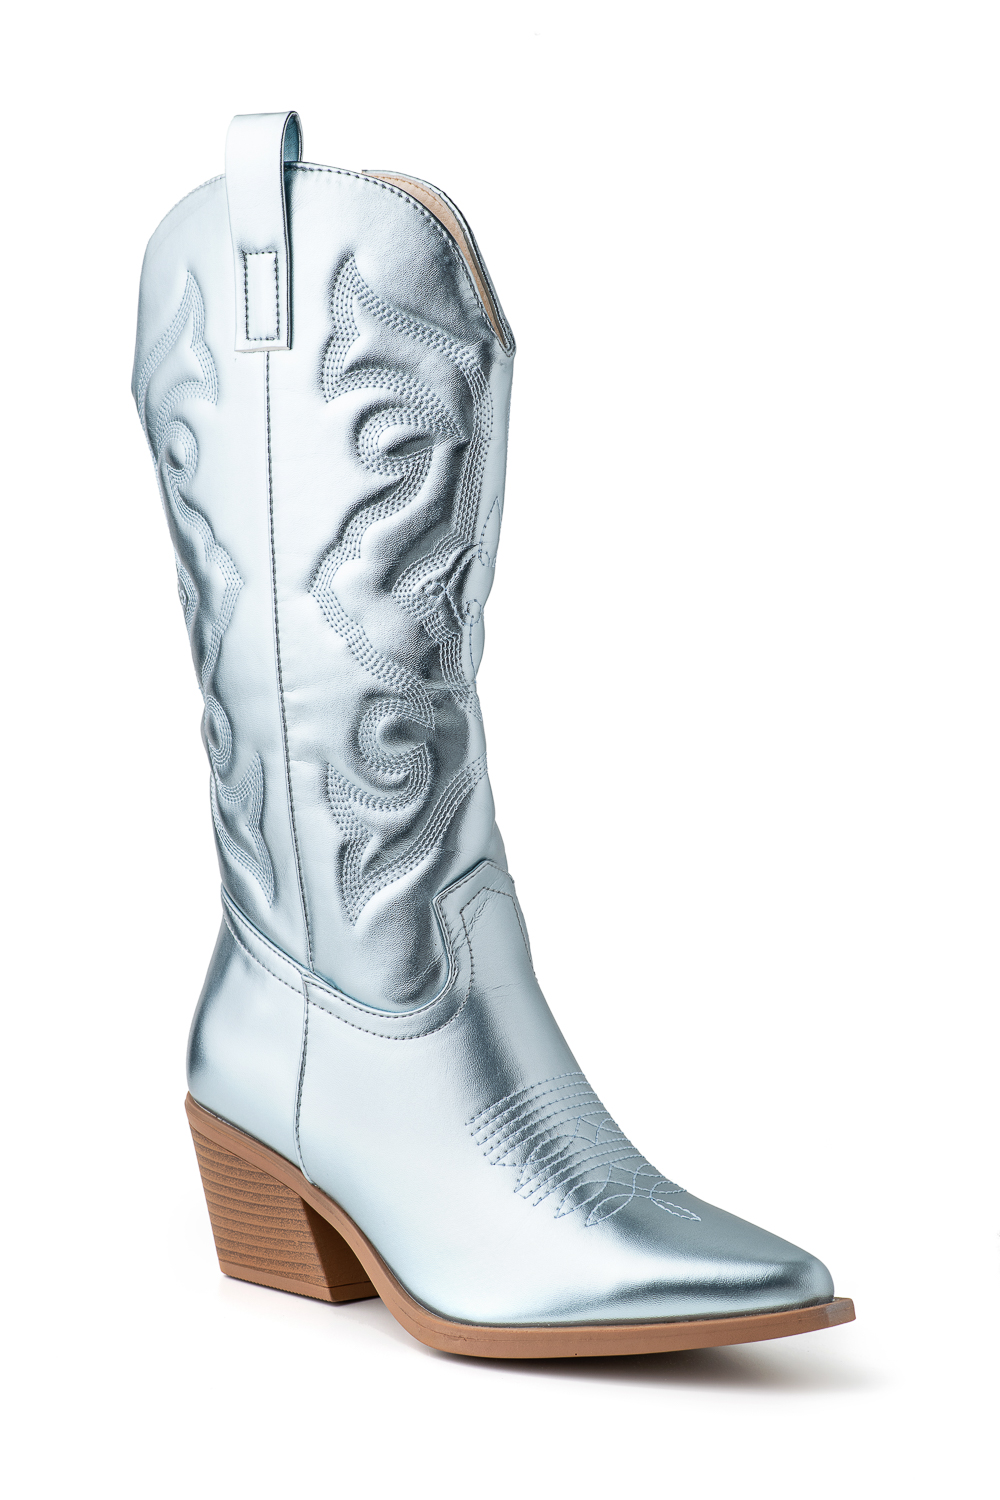 Metallic Blue Cowboy Boots